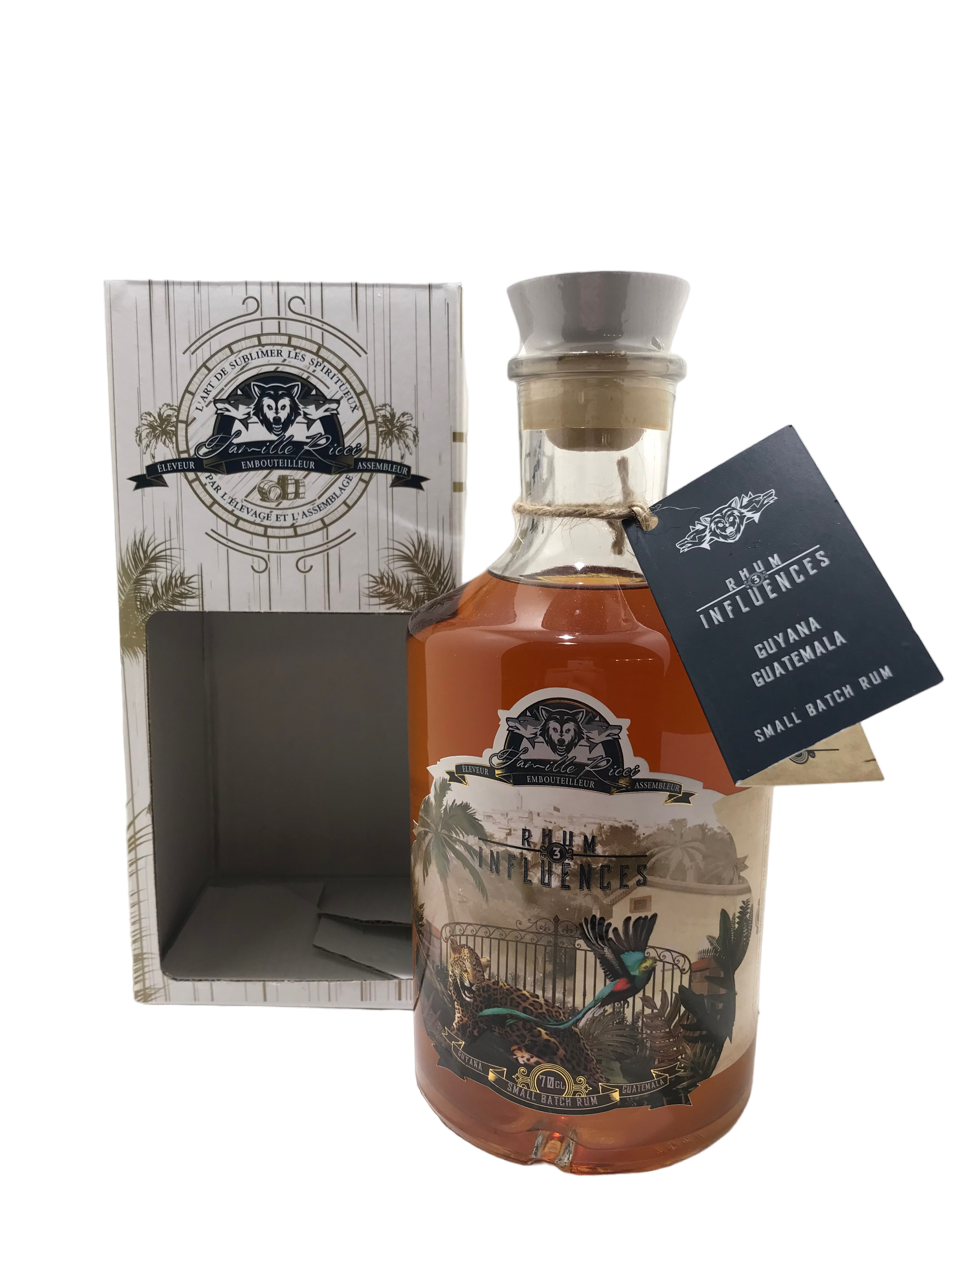 rhum rum spirit spiritueux famille ricci france french rhum influences 3 guyana guatemala guyane small batch